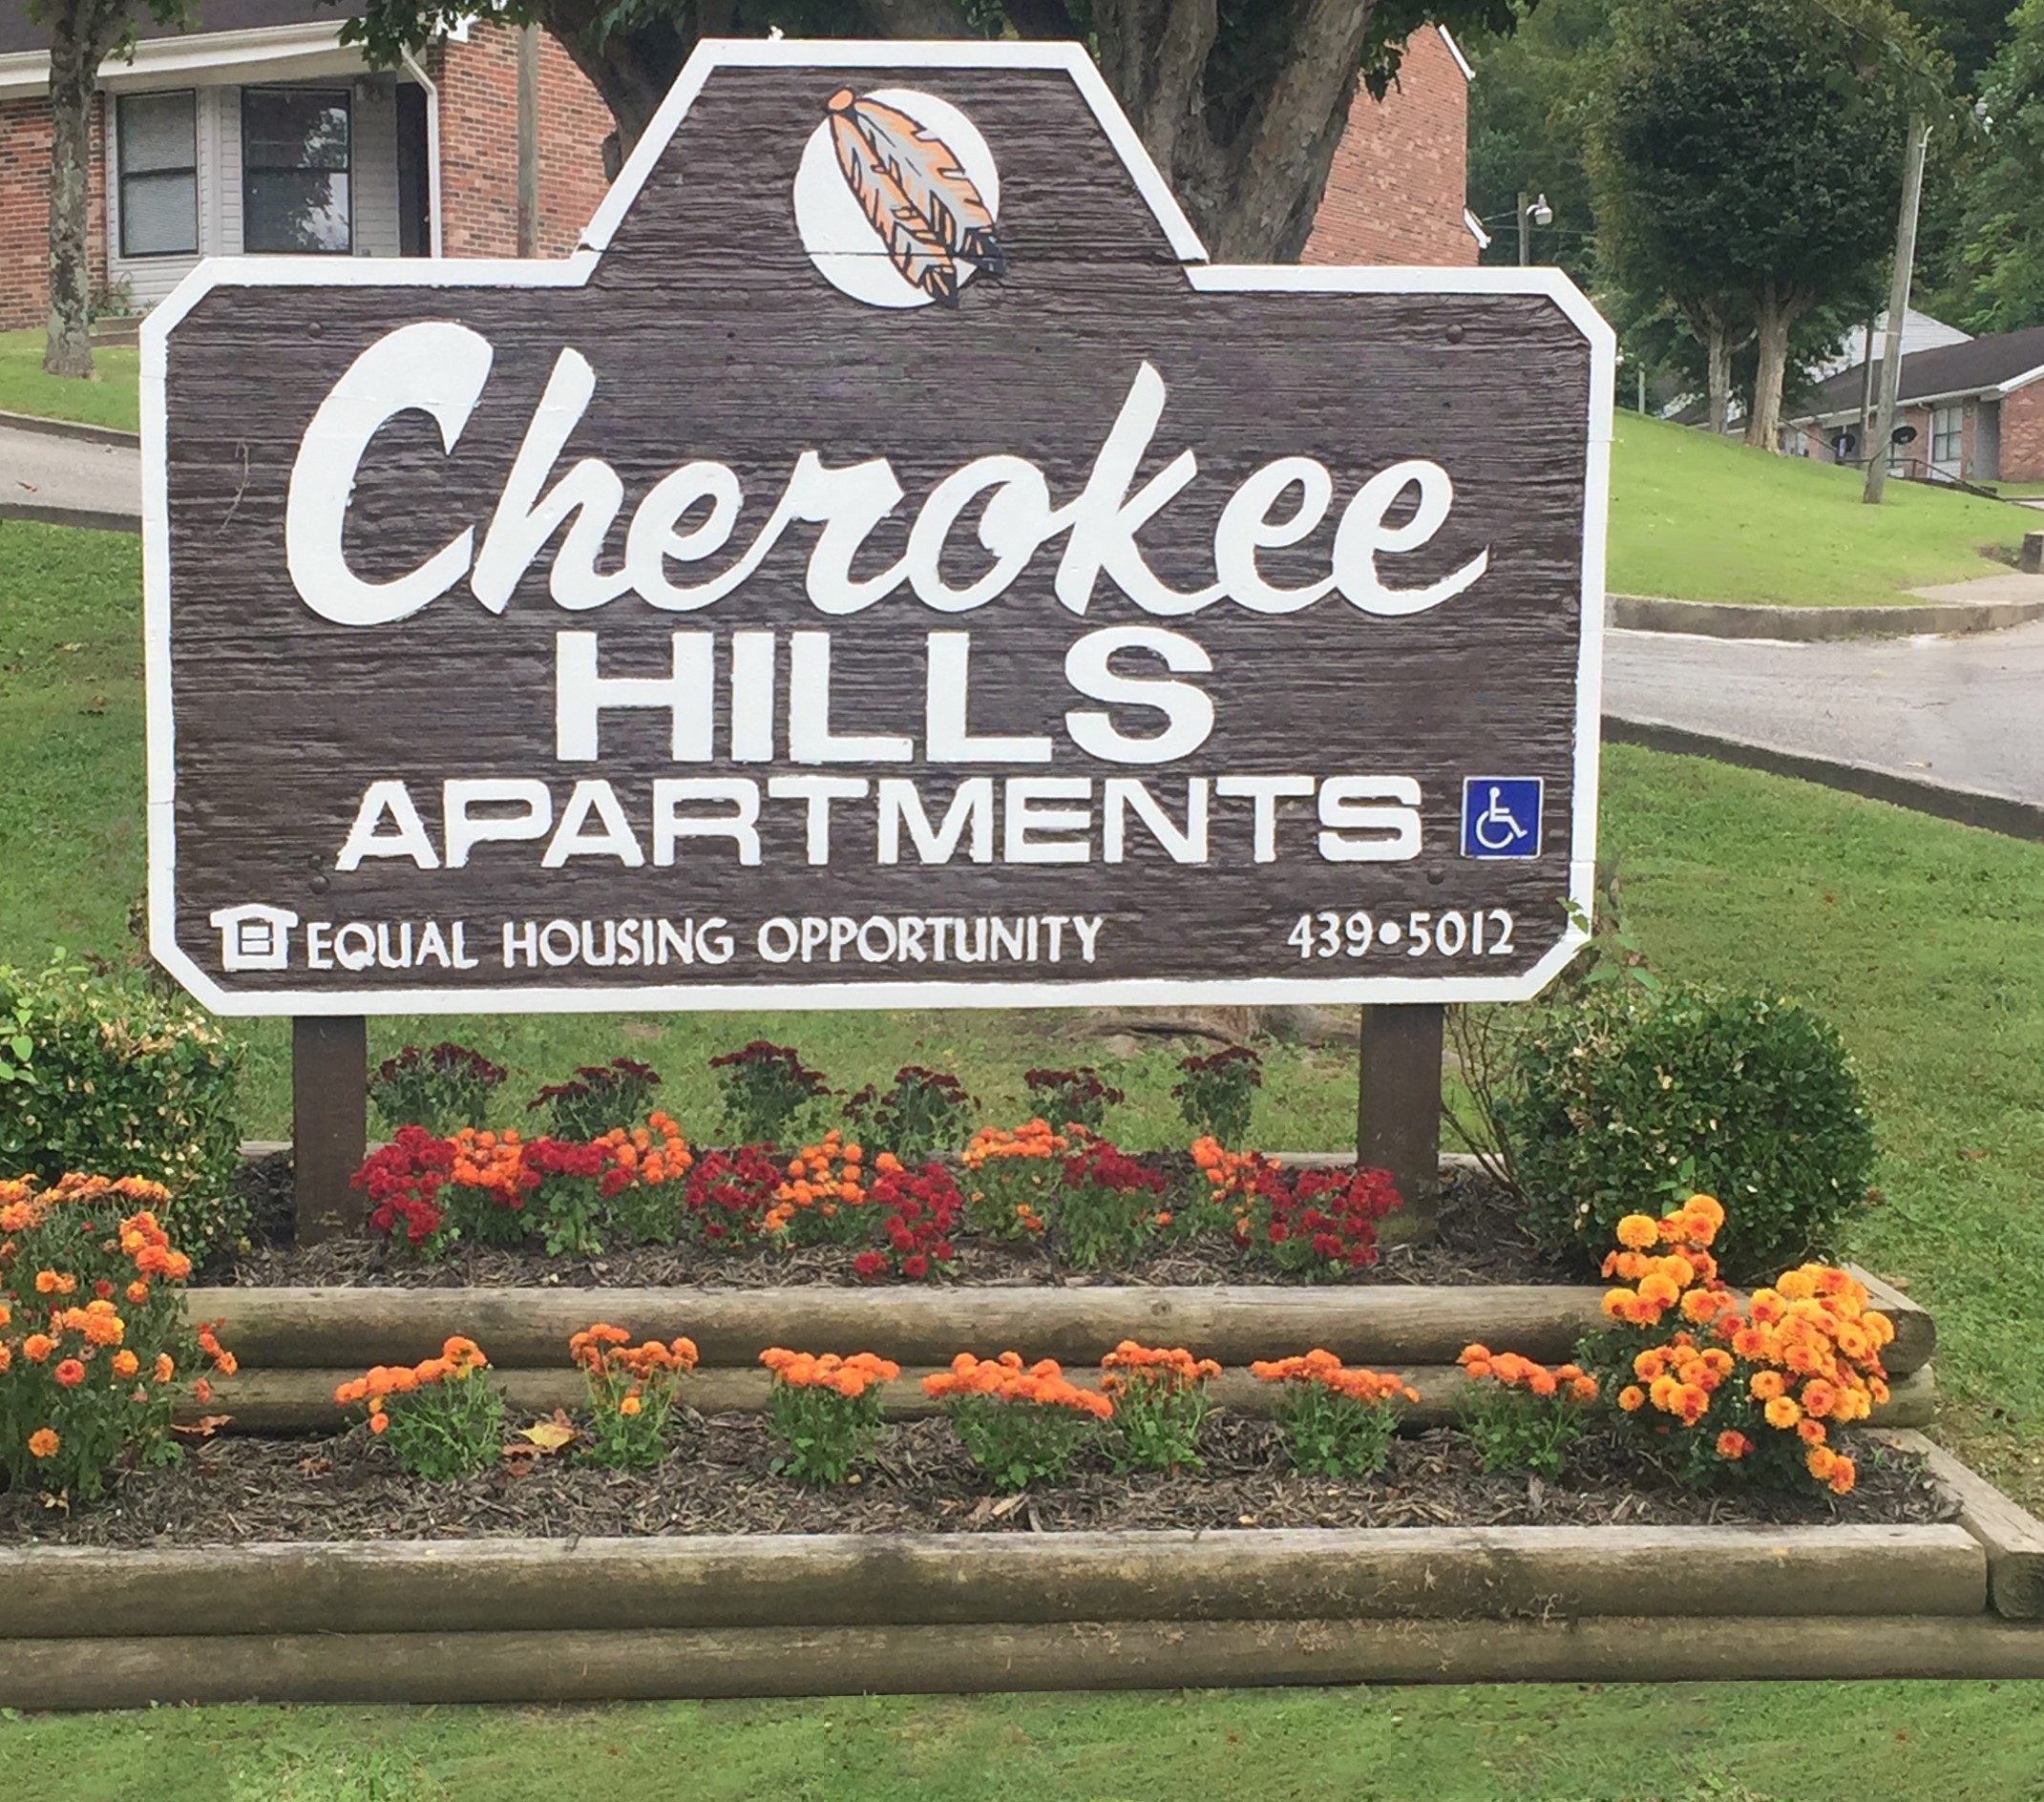 Cherokee Hills Apartments